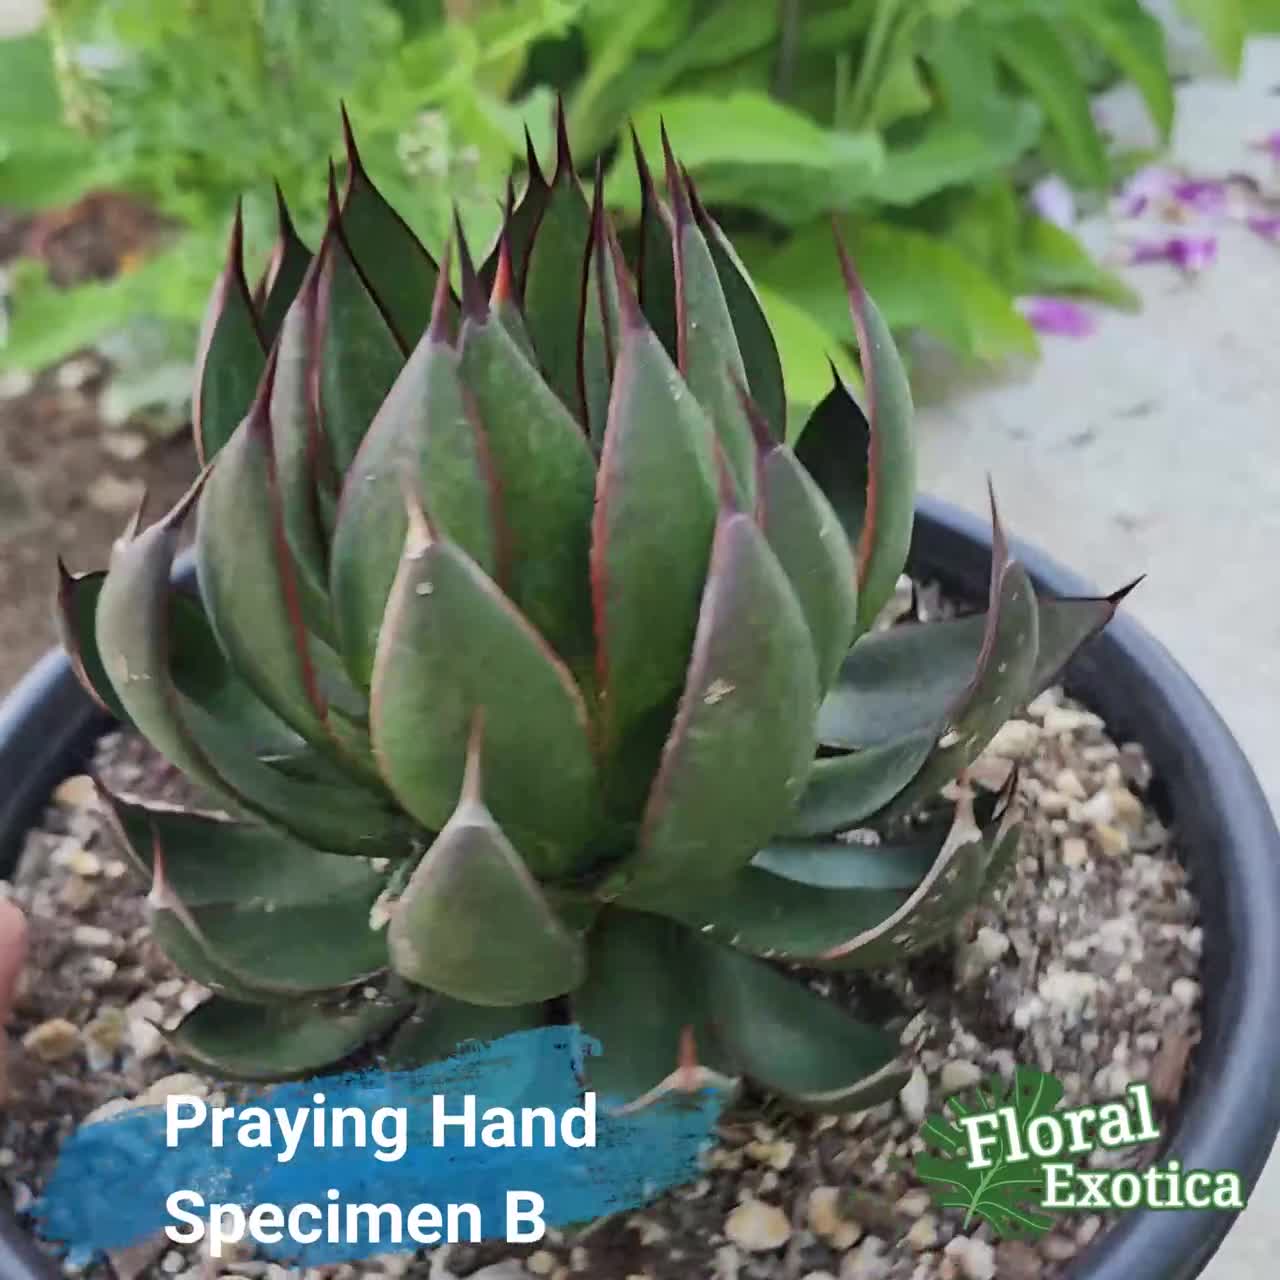 Mangave Praying Hands - マンガベの祈りの手 - 希少植物 - Ultra Rare - 龍舌蘭専門店 - US Stock -  植物検疫証明書付きで出荷